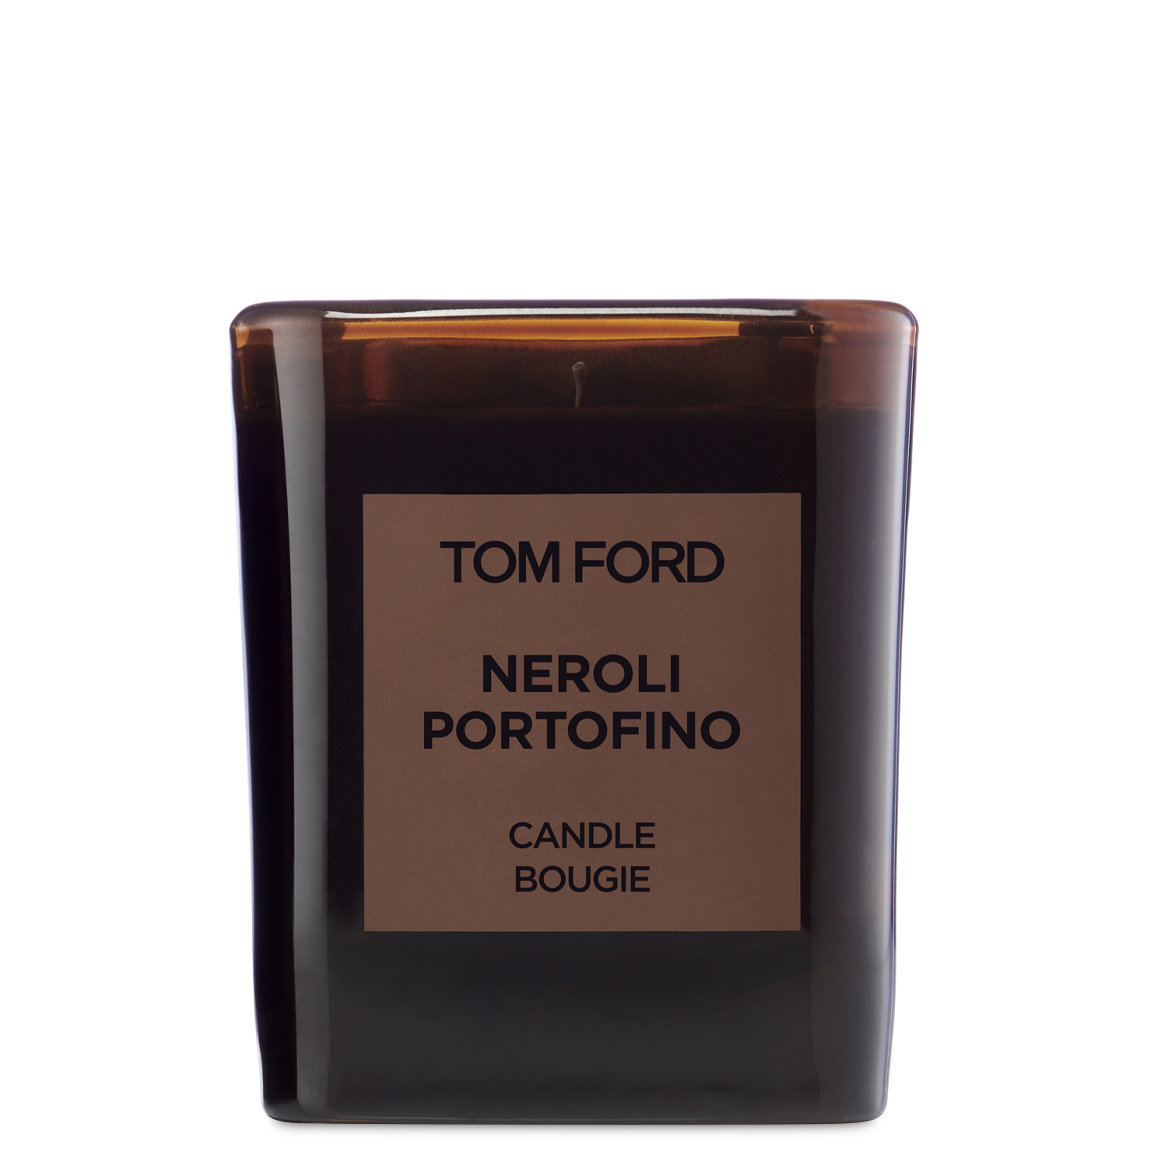 TOM FORD Neroli Portofino Candle alternative view 1 - product swatch.